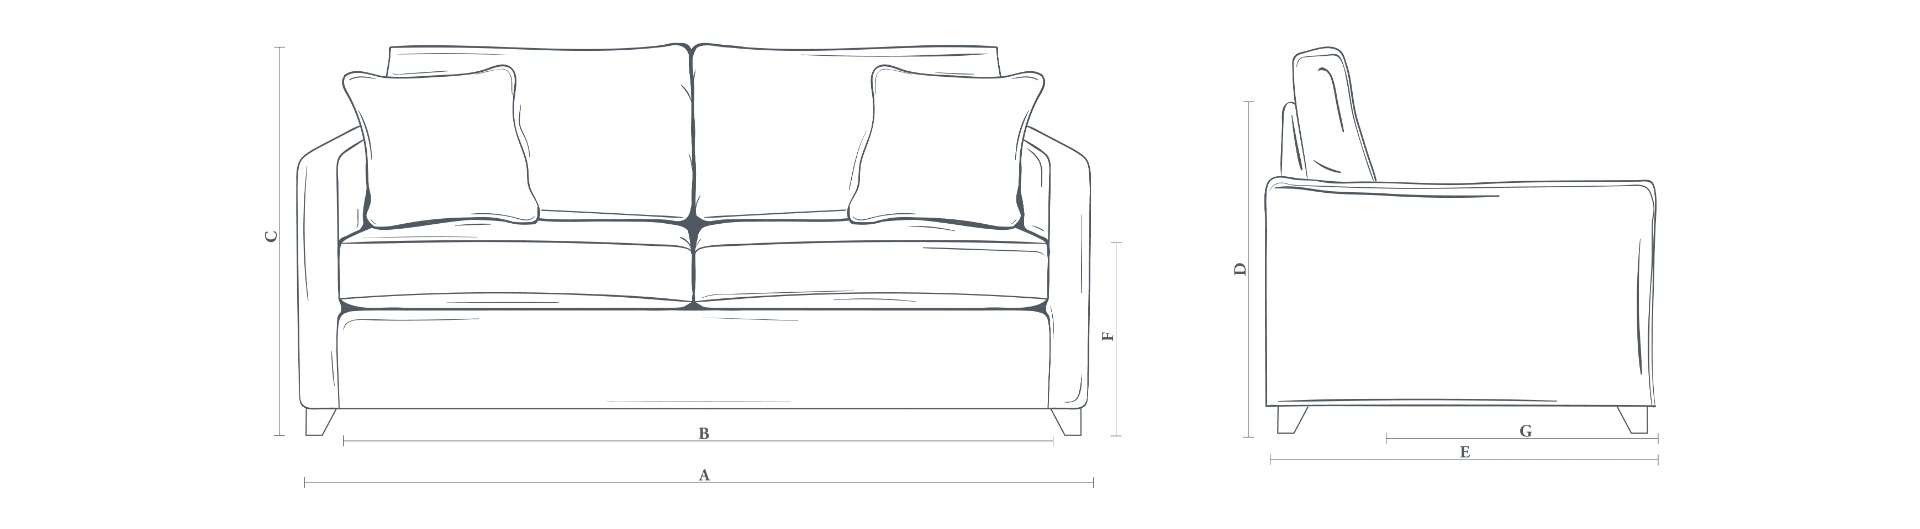 The Foxham Sofa 3 Seater